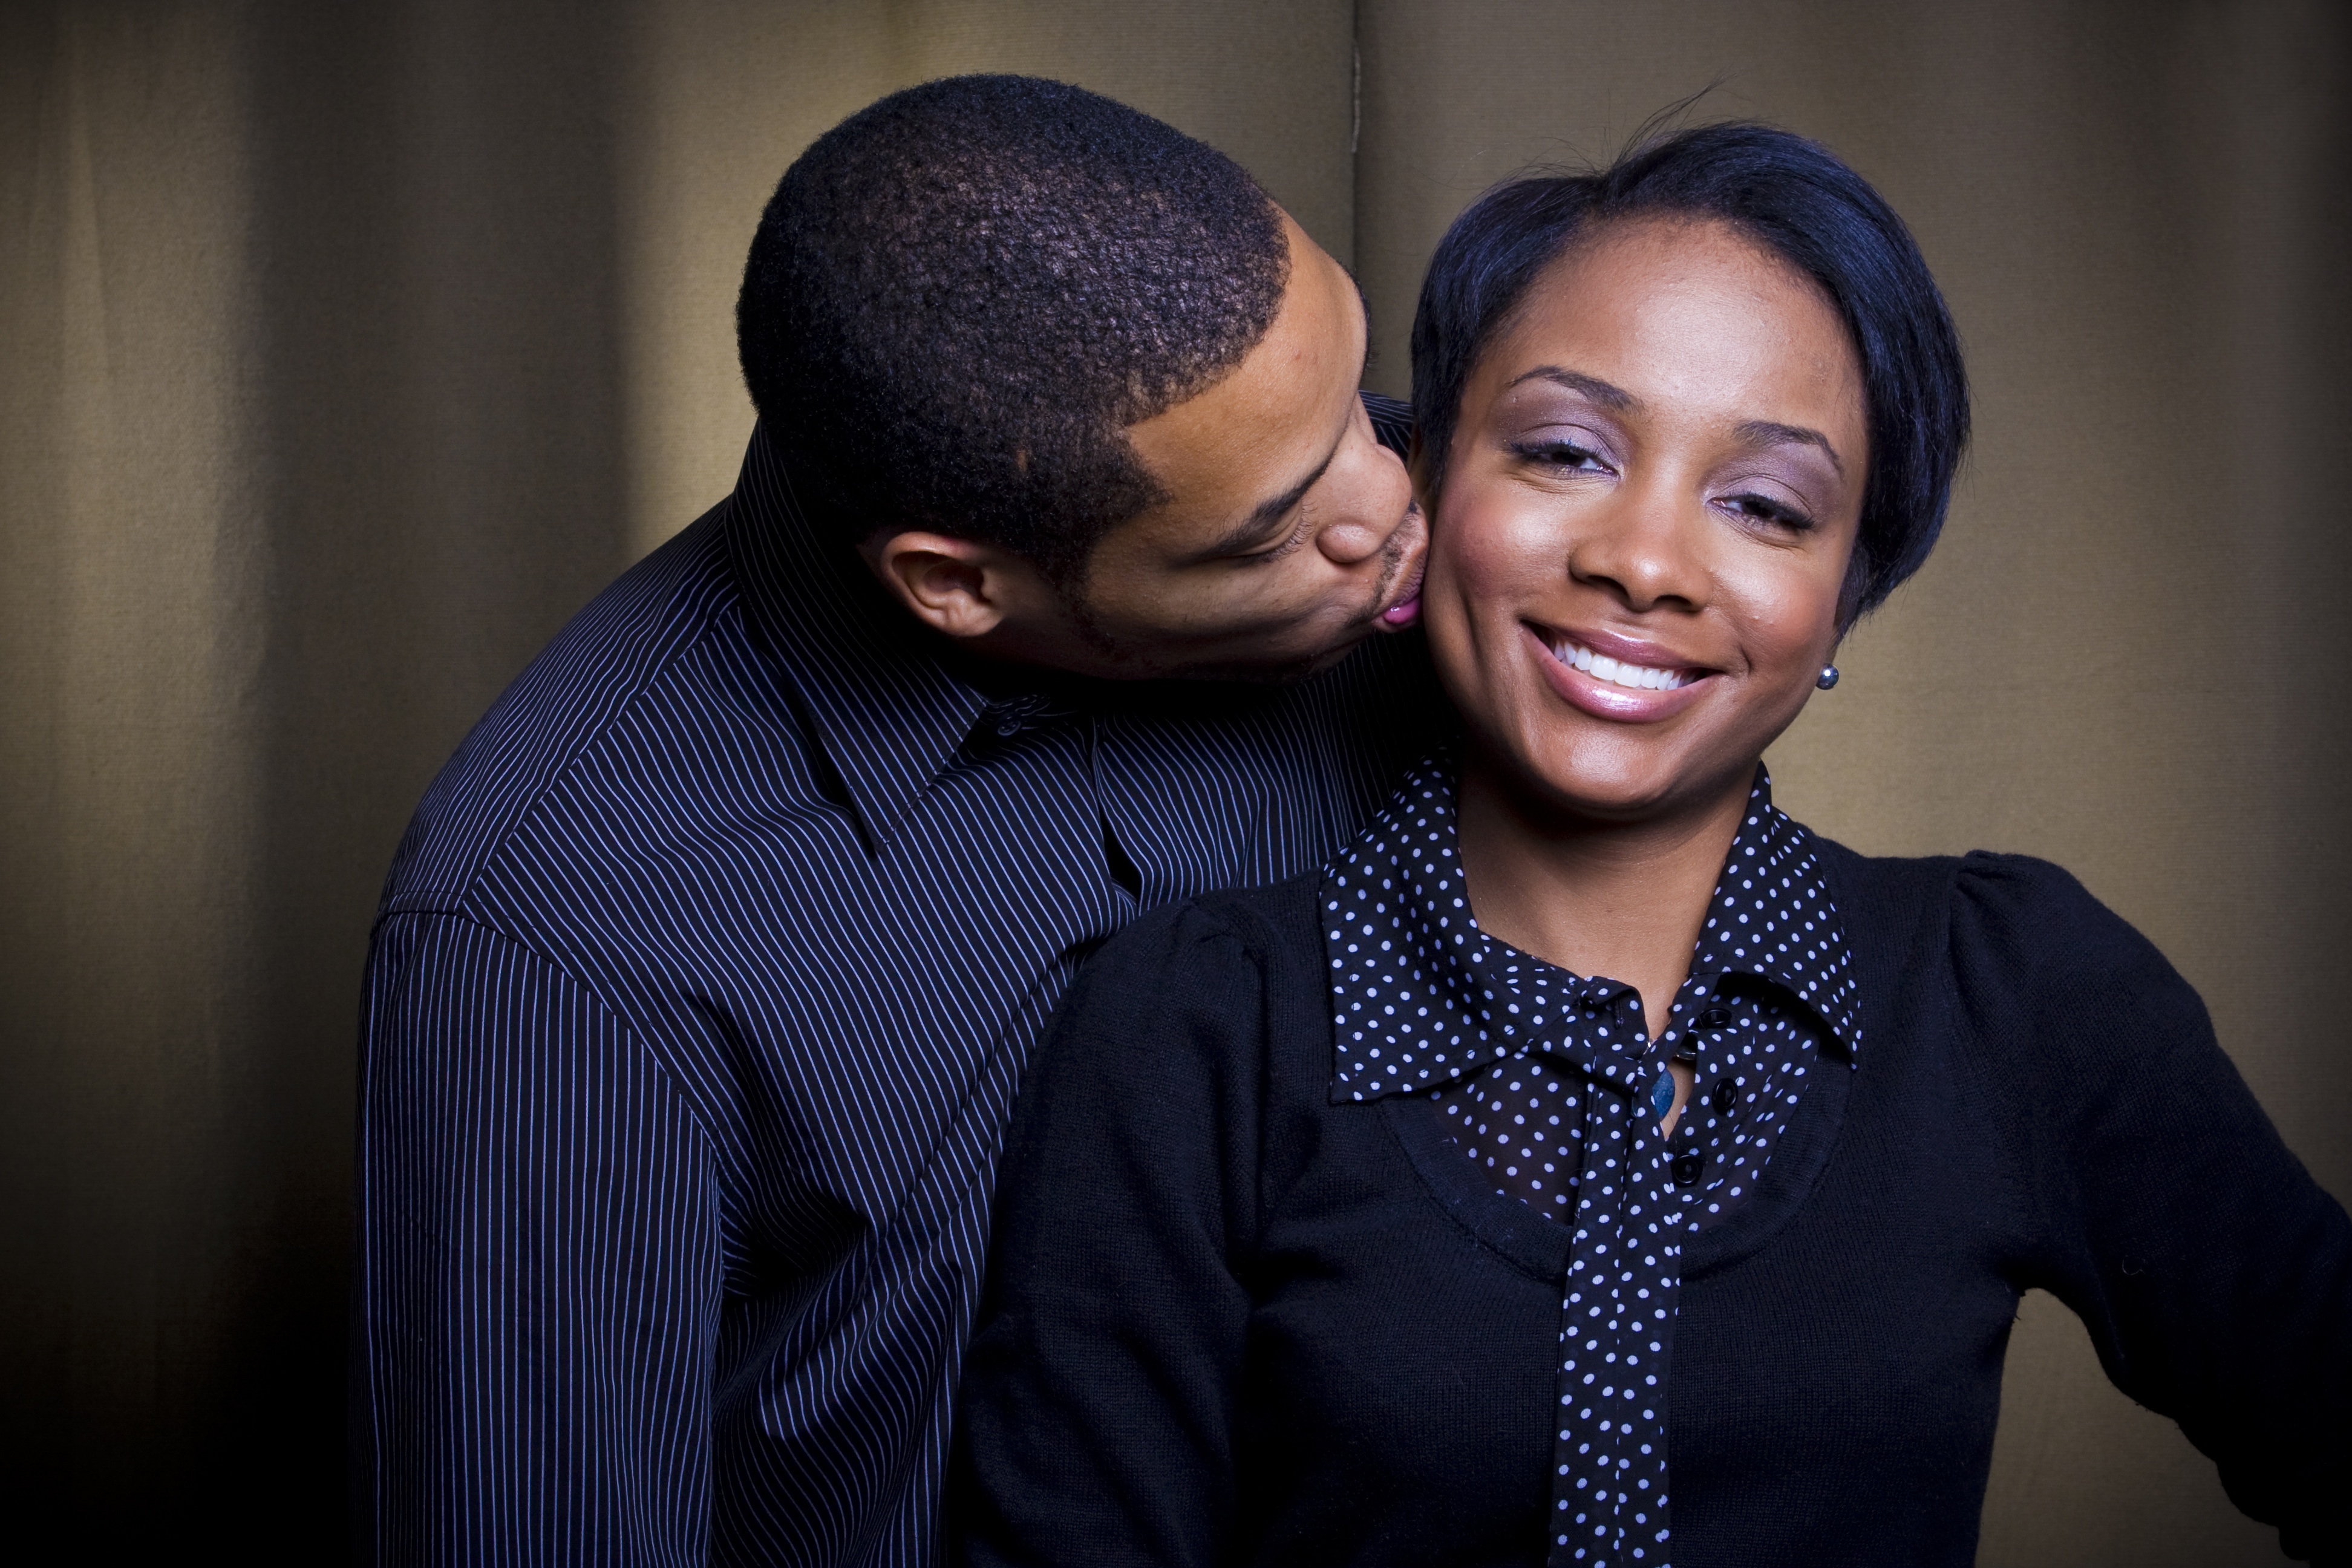 Ai wife. Жены афроамериканцев. Негр целует в щеку. Husband. Black man and Black woman.